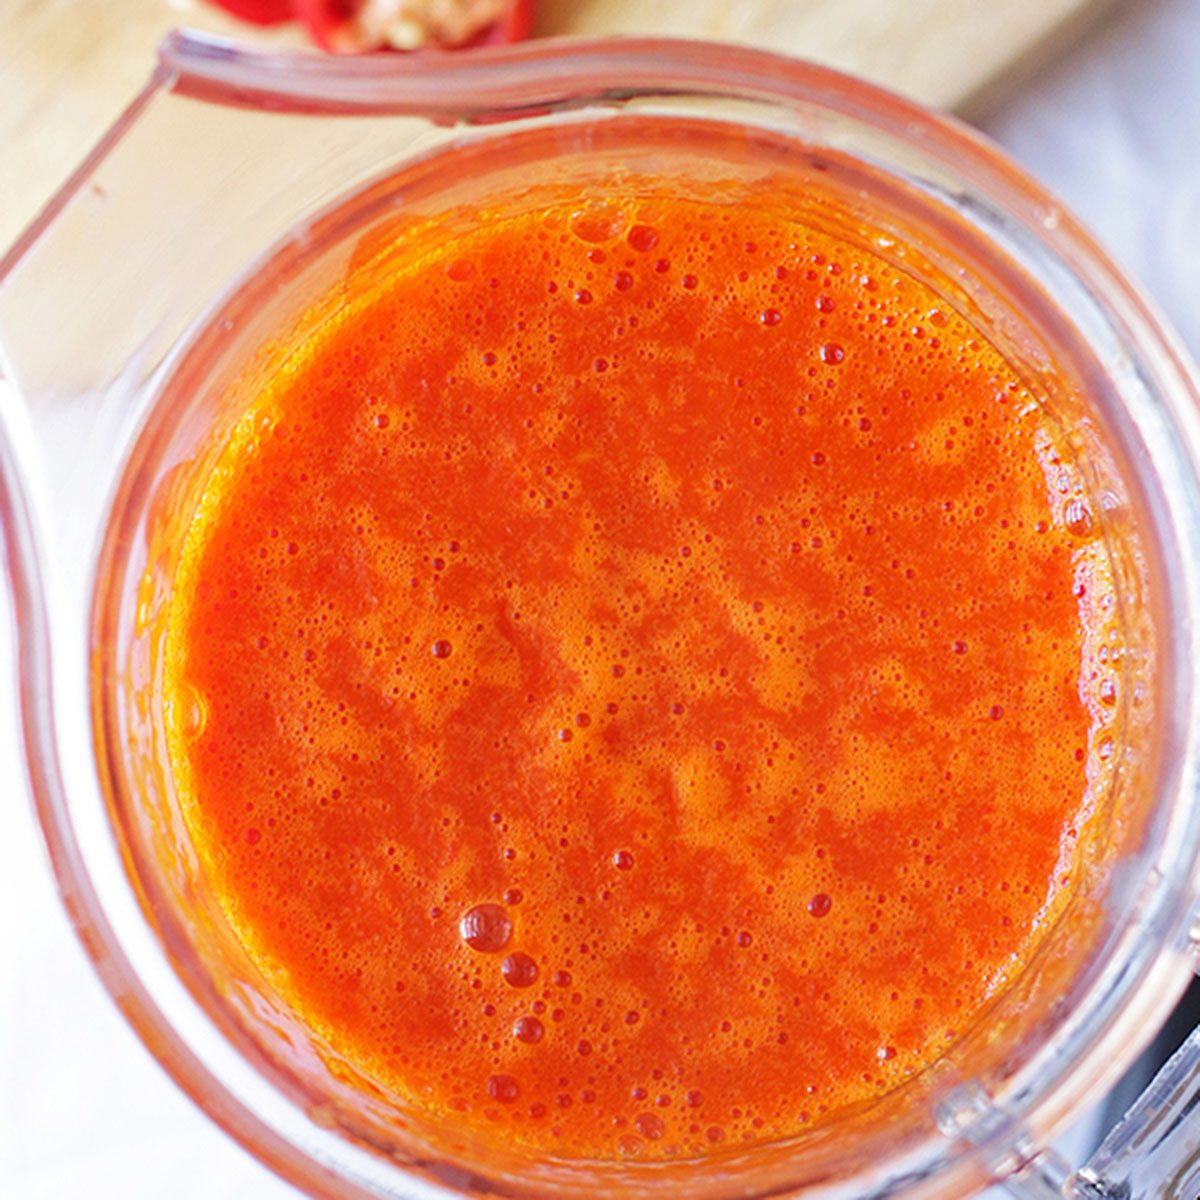 15-Minute Homemade Hot Sauce